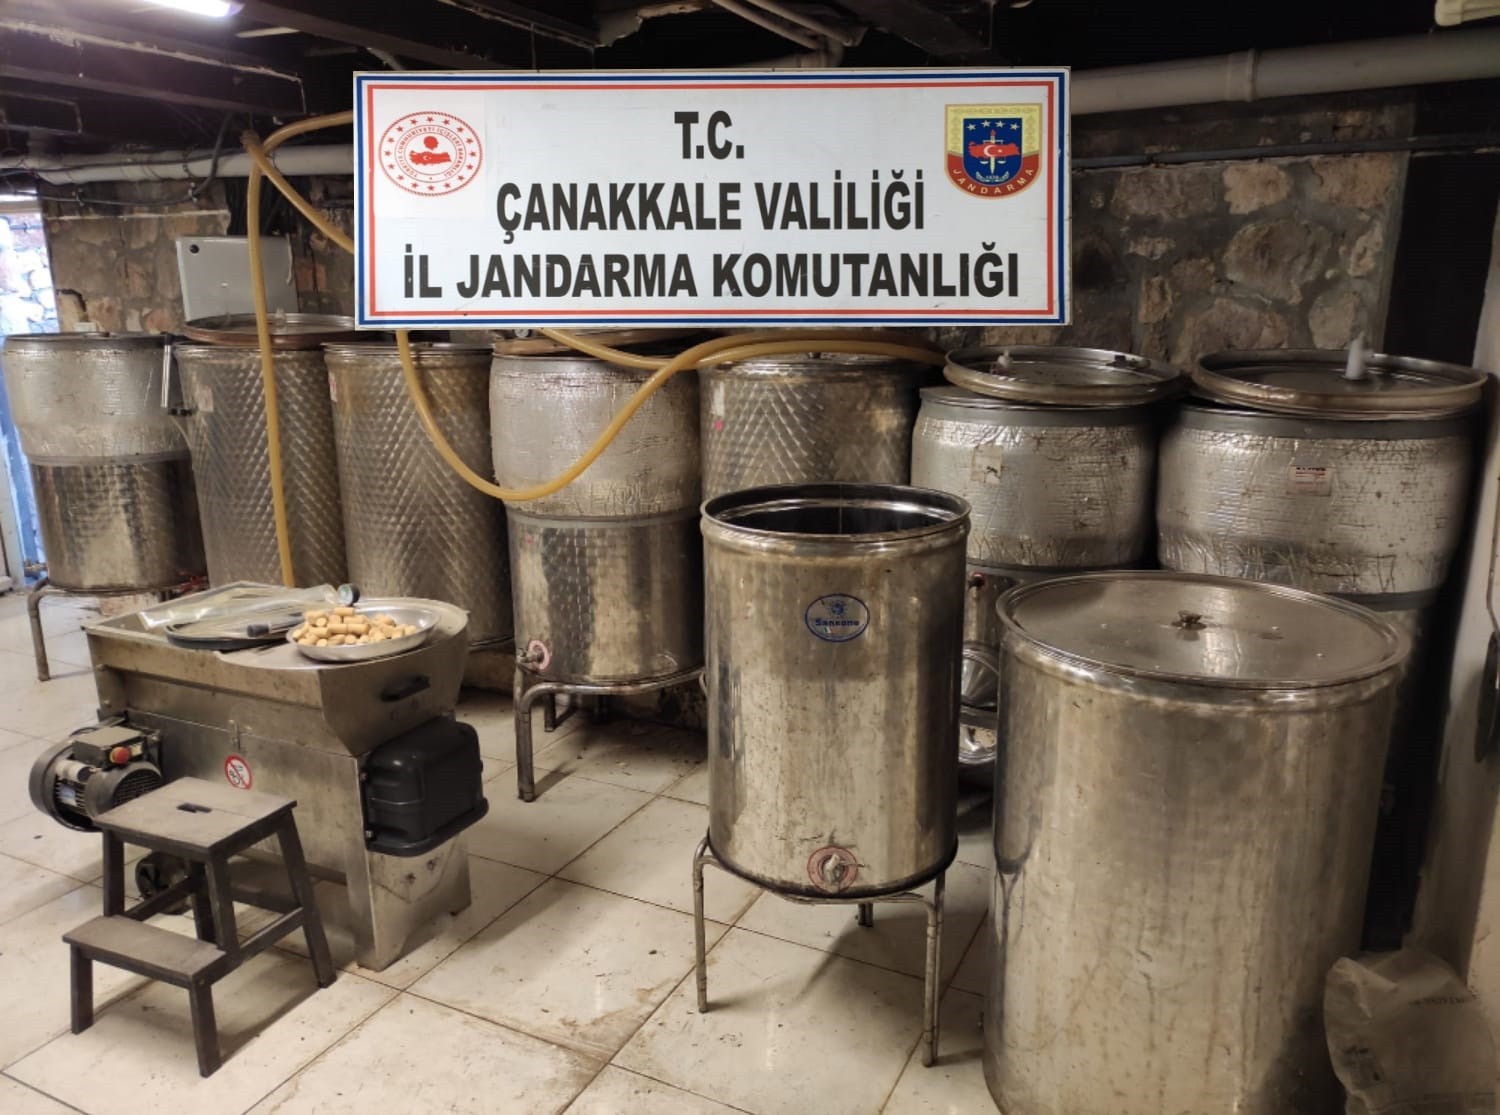 Çanakkale’de 7 bin 580 litre sahte alkollü içki ele geçirildi #canakkale